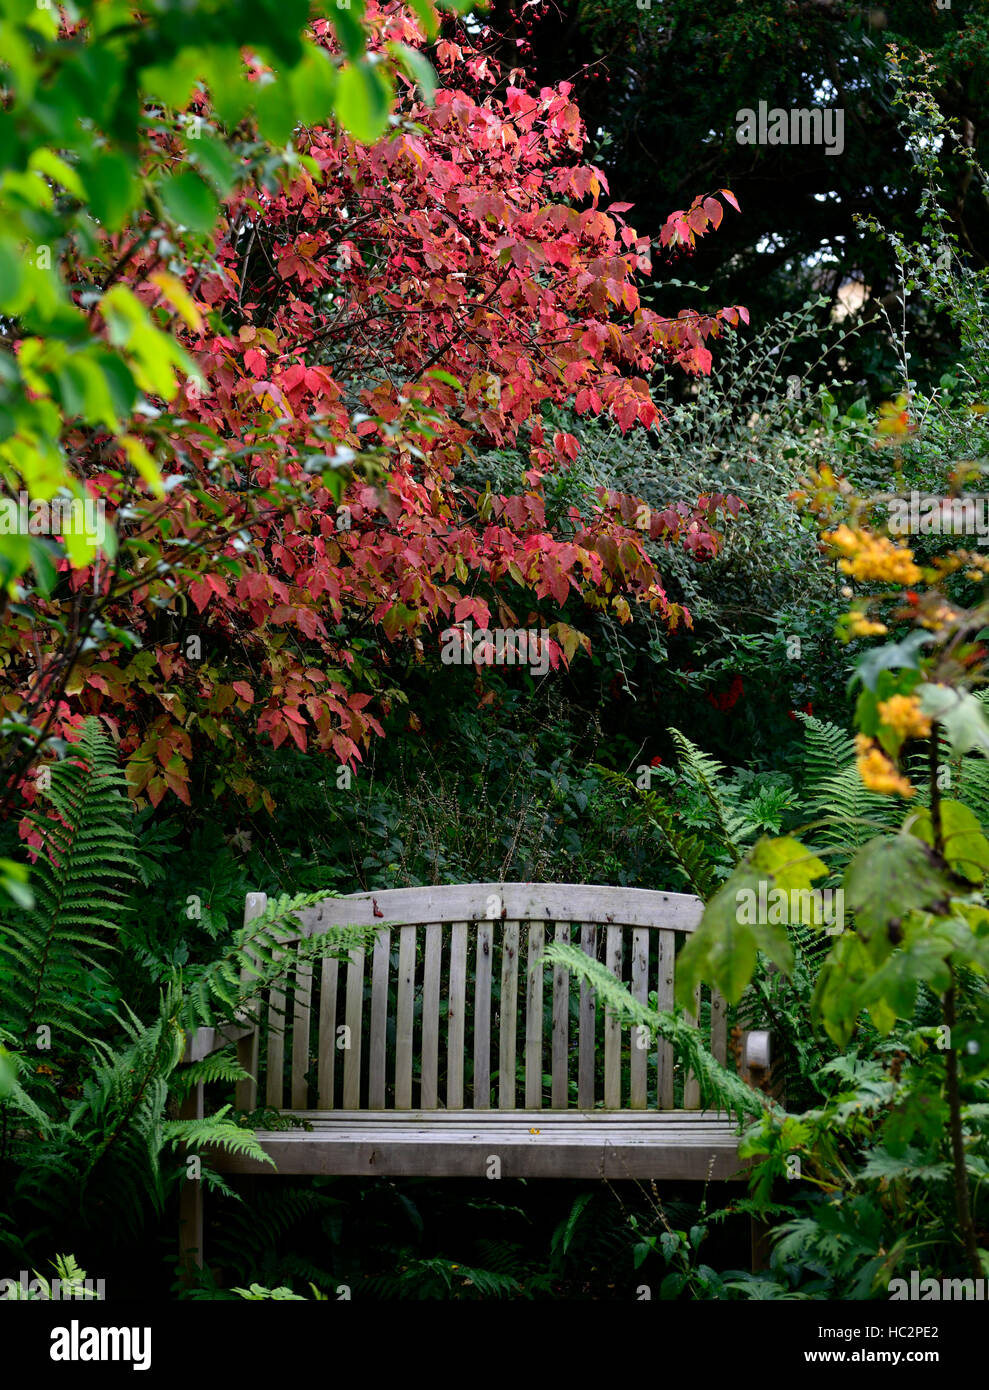 Euonymus alatus feuilles rouge banquette coin tranquille d'automne jardinage jardin solitude tranquille paix tranquillité Floral RM Banque D'Images